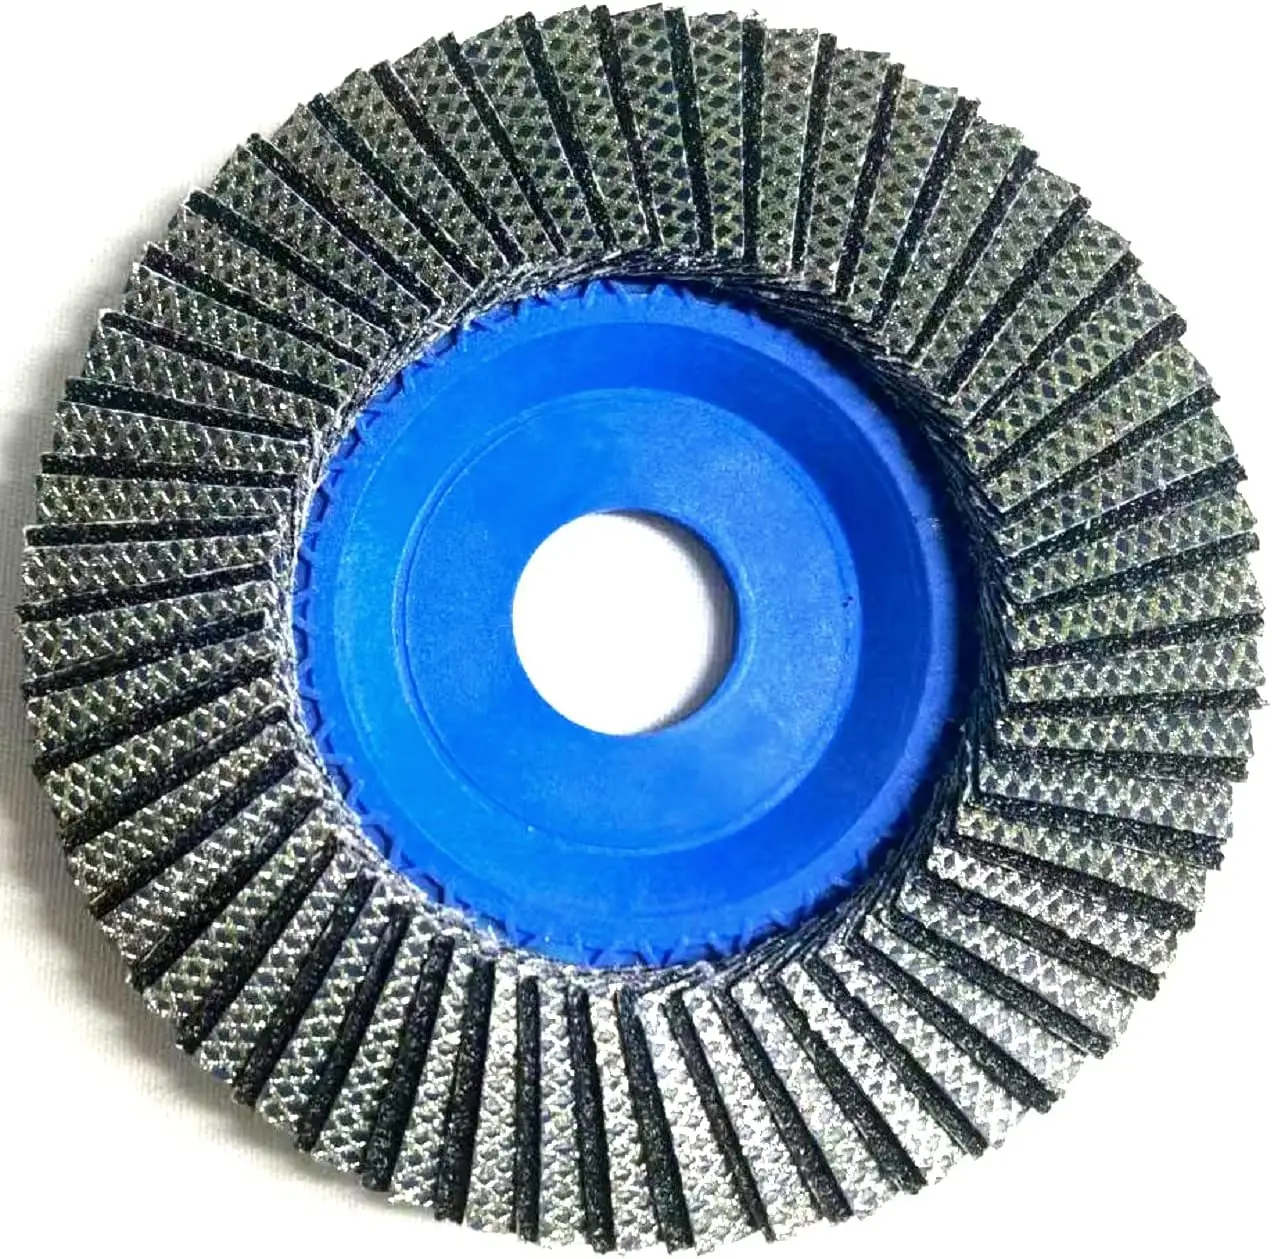 PEXMIENTAS 115mm T27 mola abrasiva per piastrelle in gres porcellanato ceramico disco lamellare diamantato elettrolitico